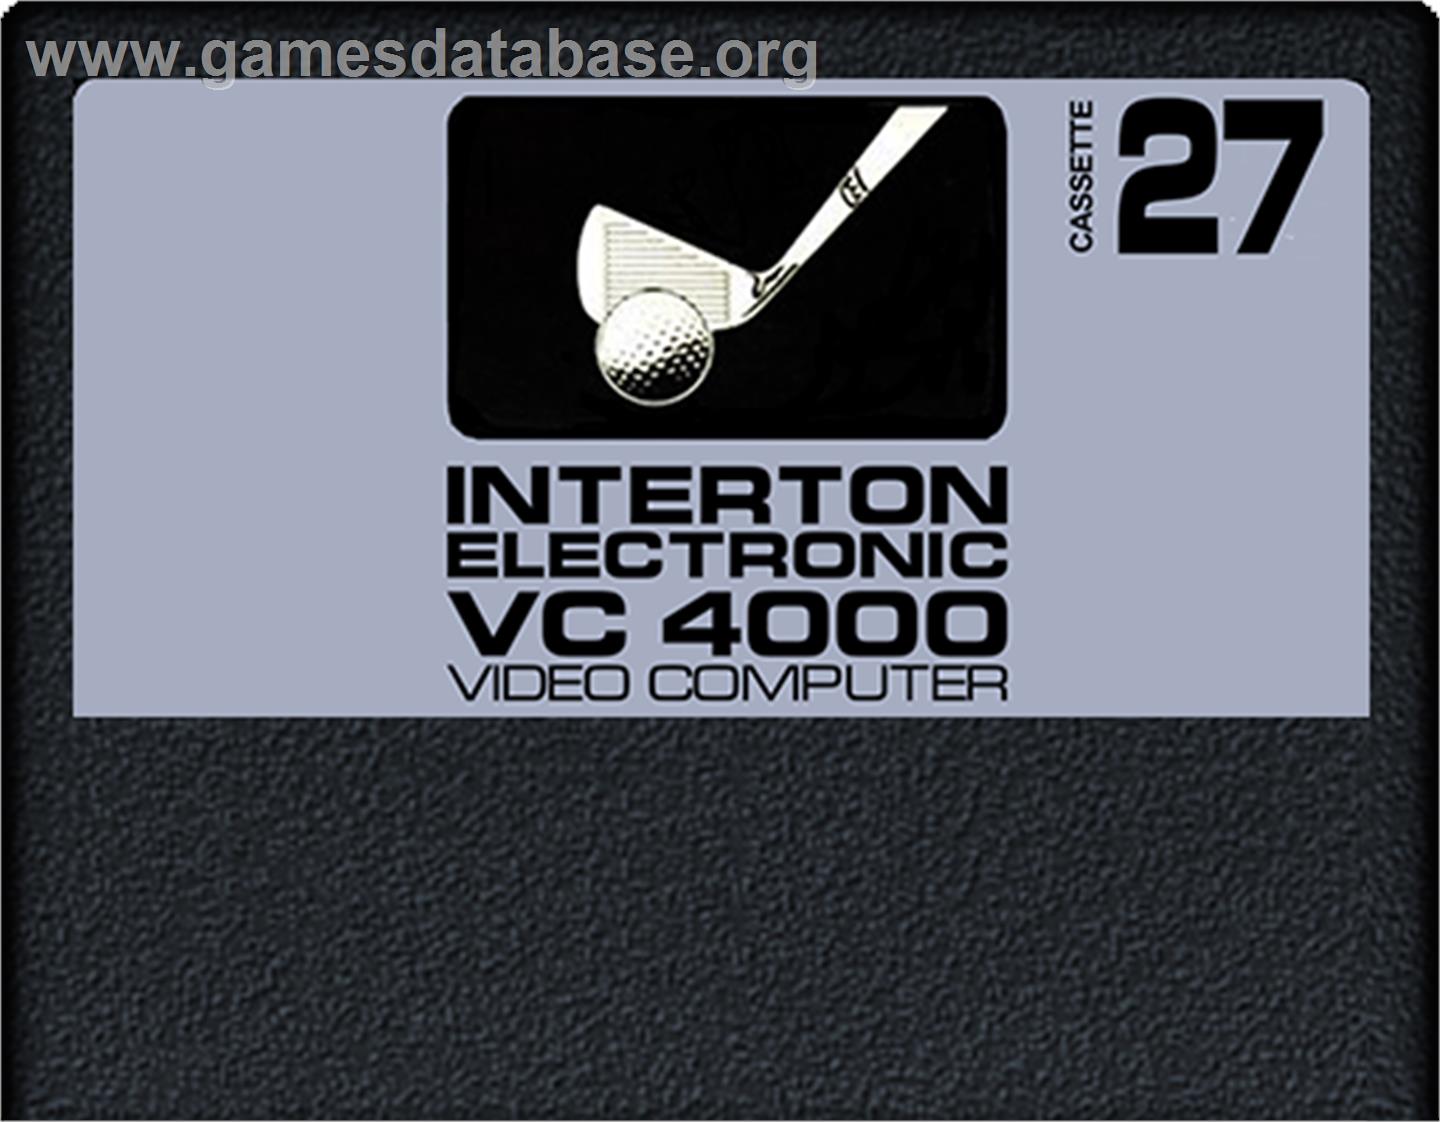 Golf - Interton VC 4000 - Artwork - Cartridge